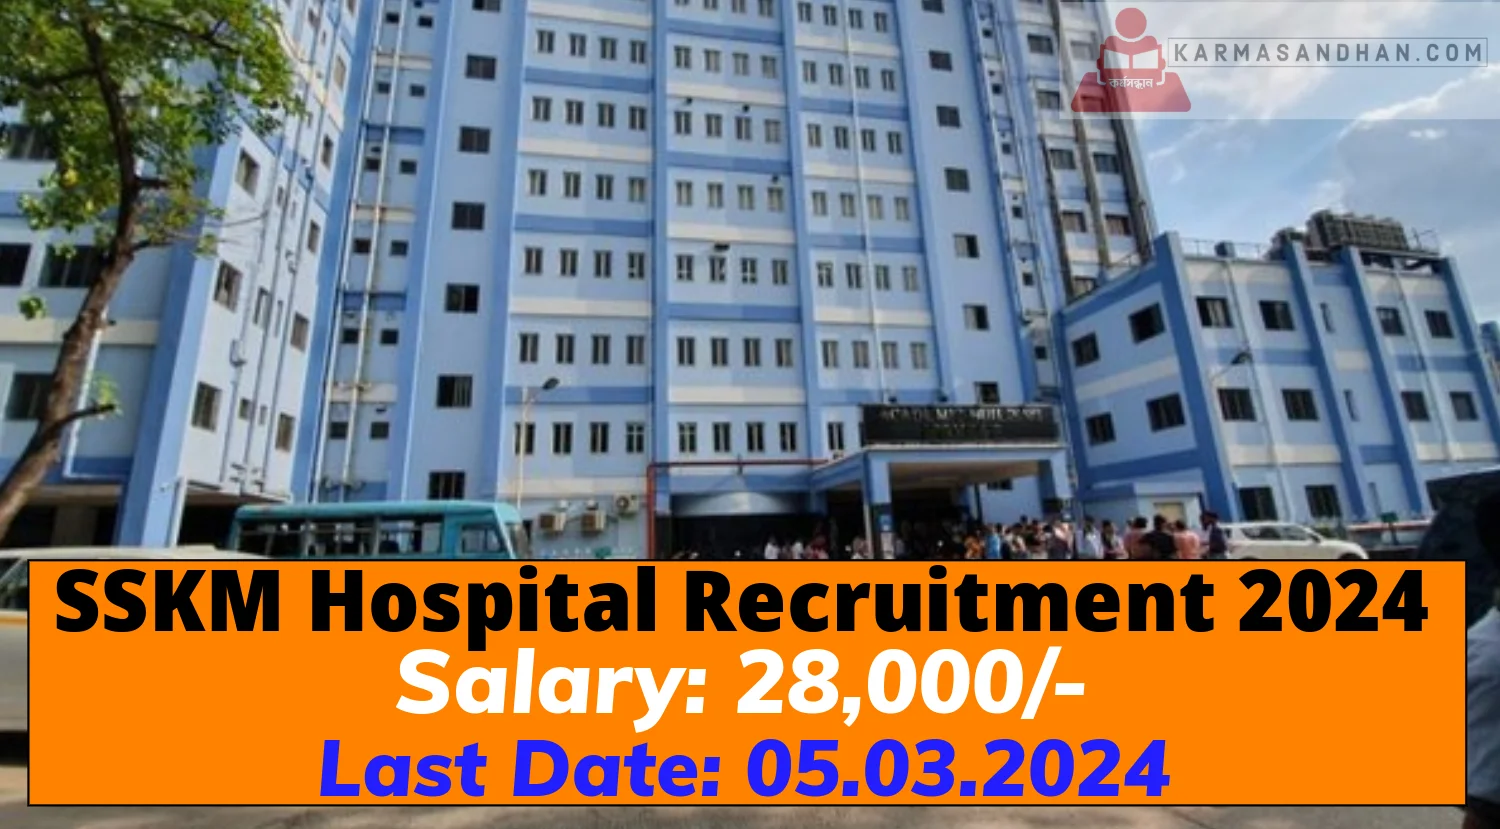 SSKM Hospital Recruitment 2024